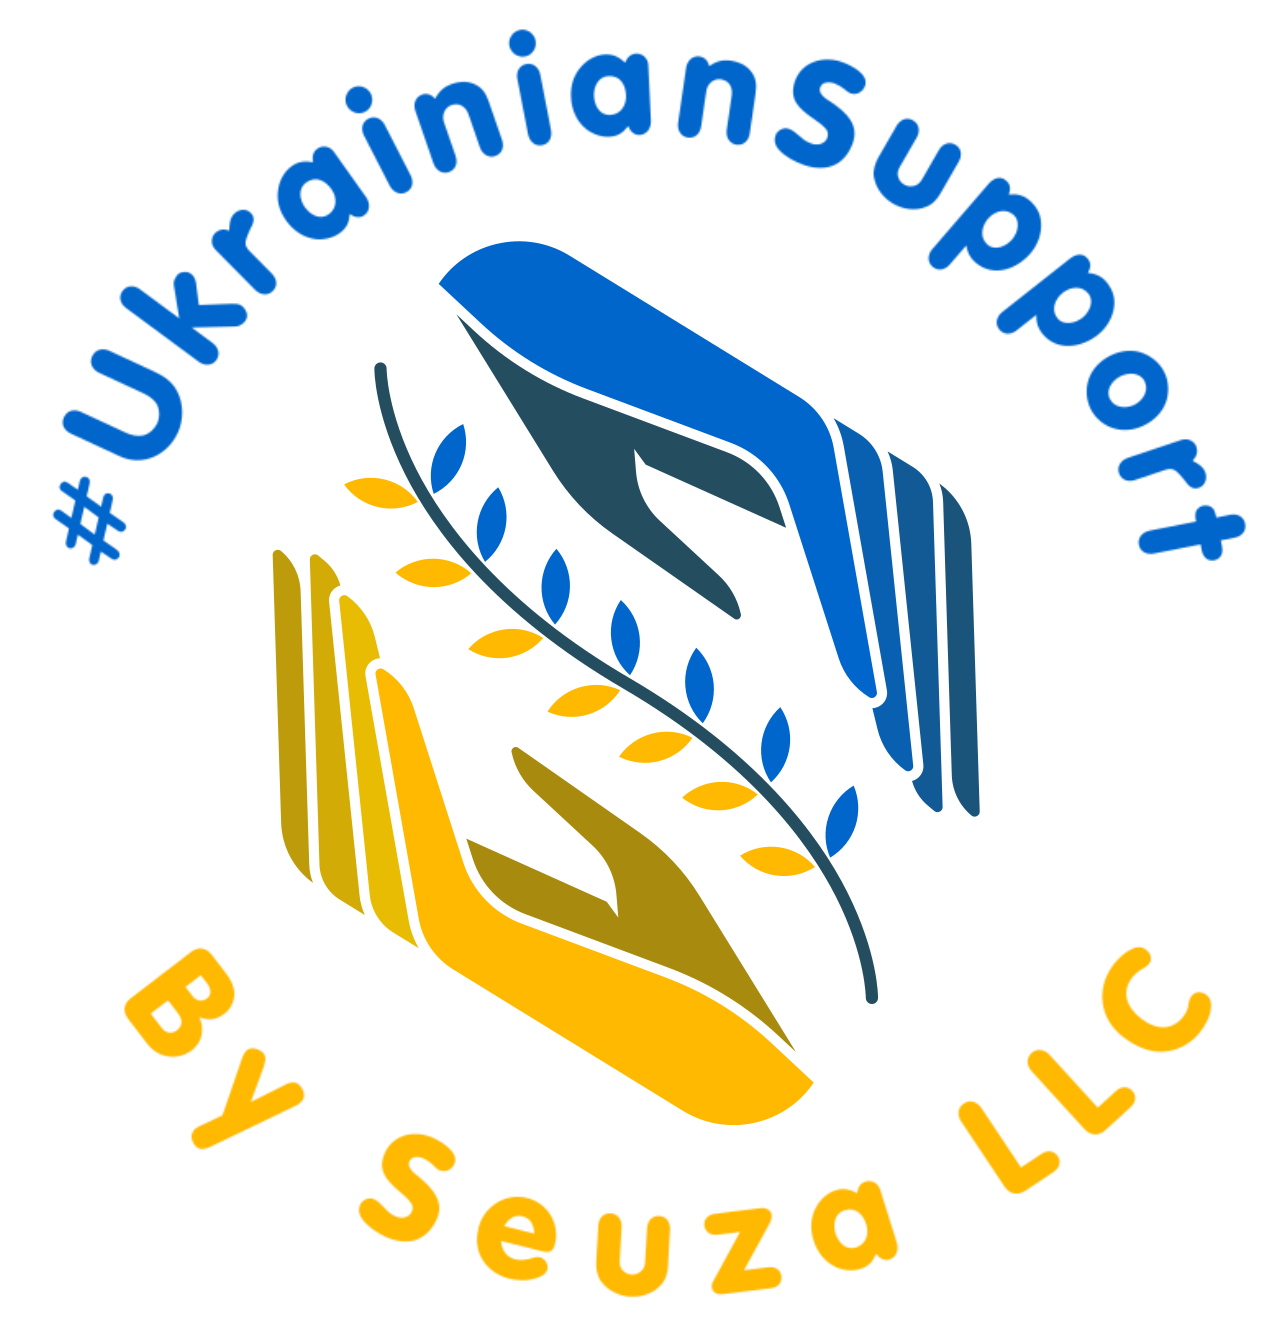 #UkrainianSupport's web page